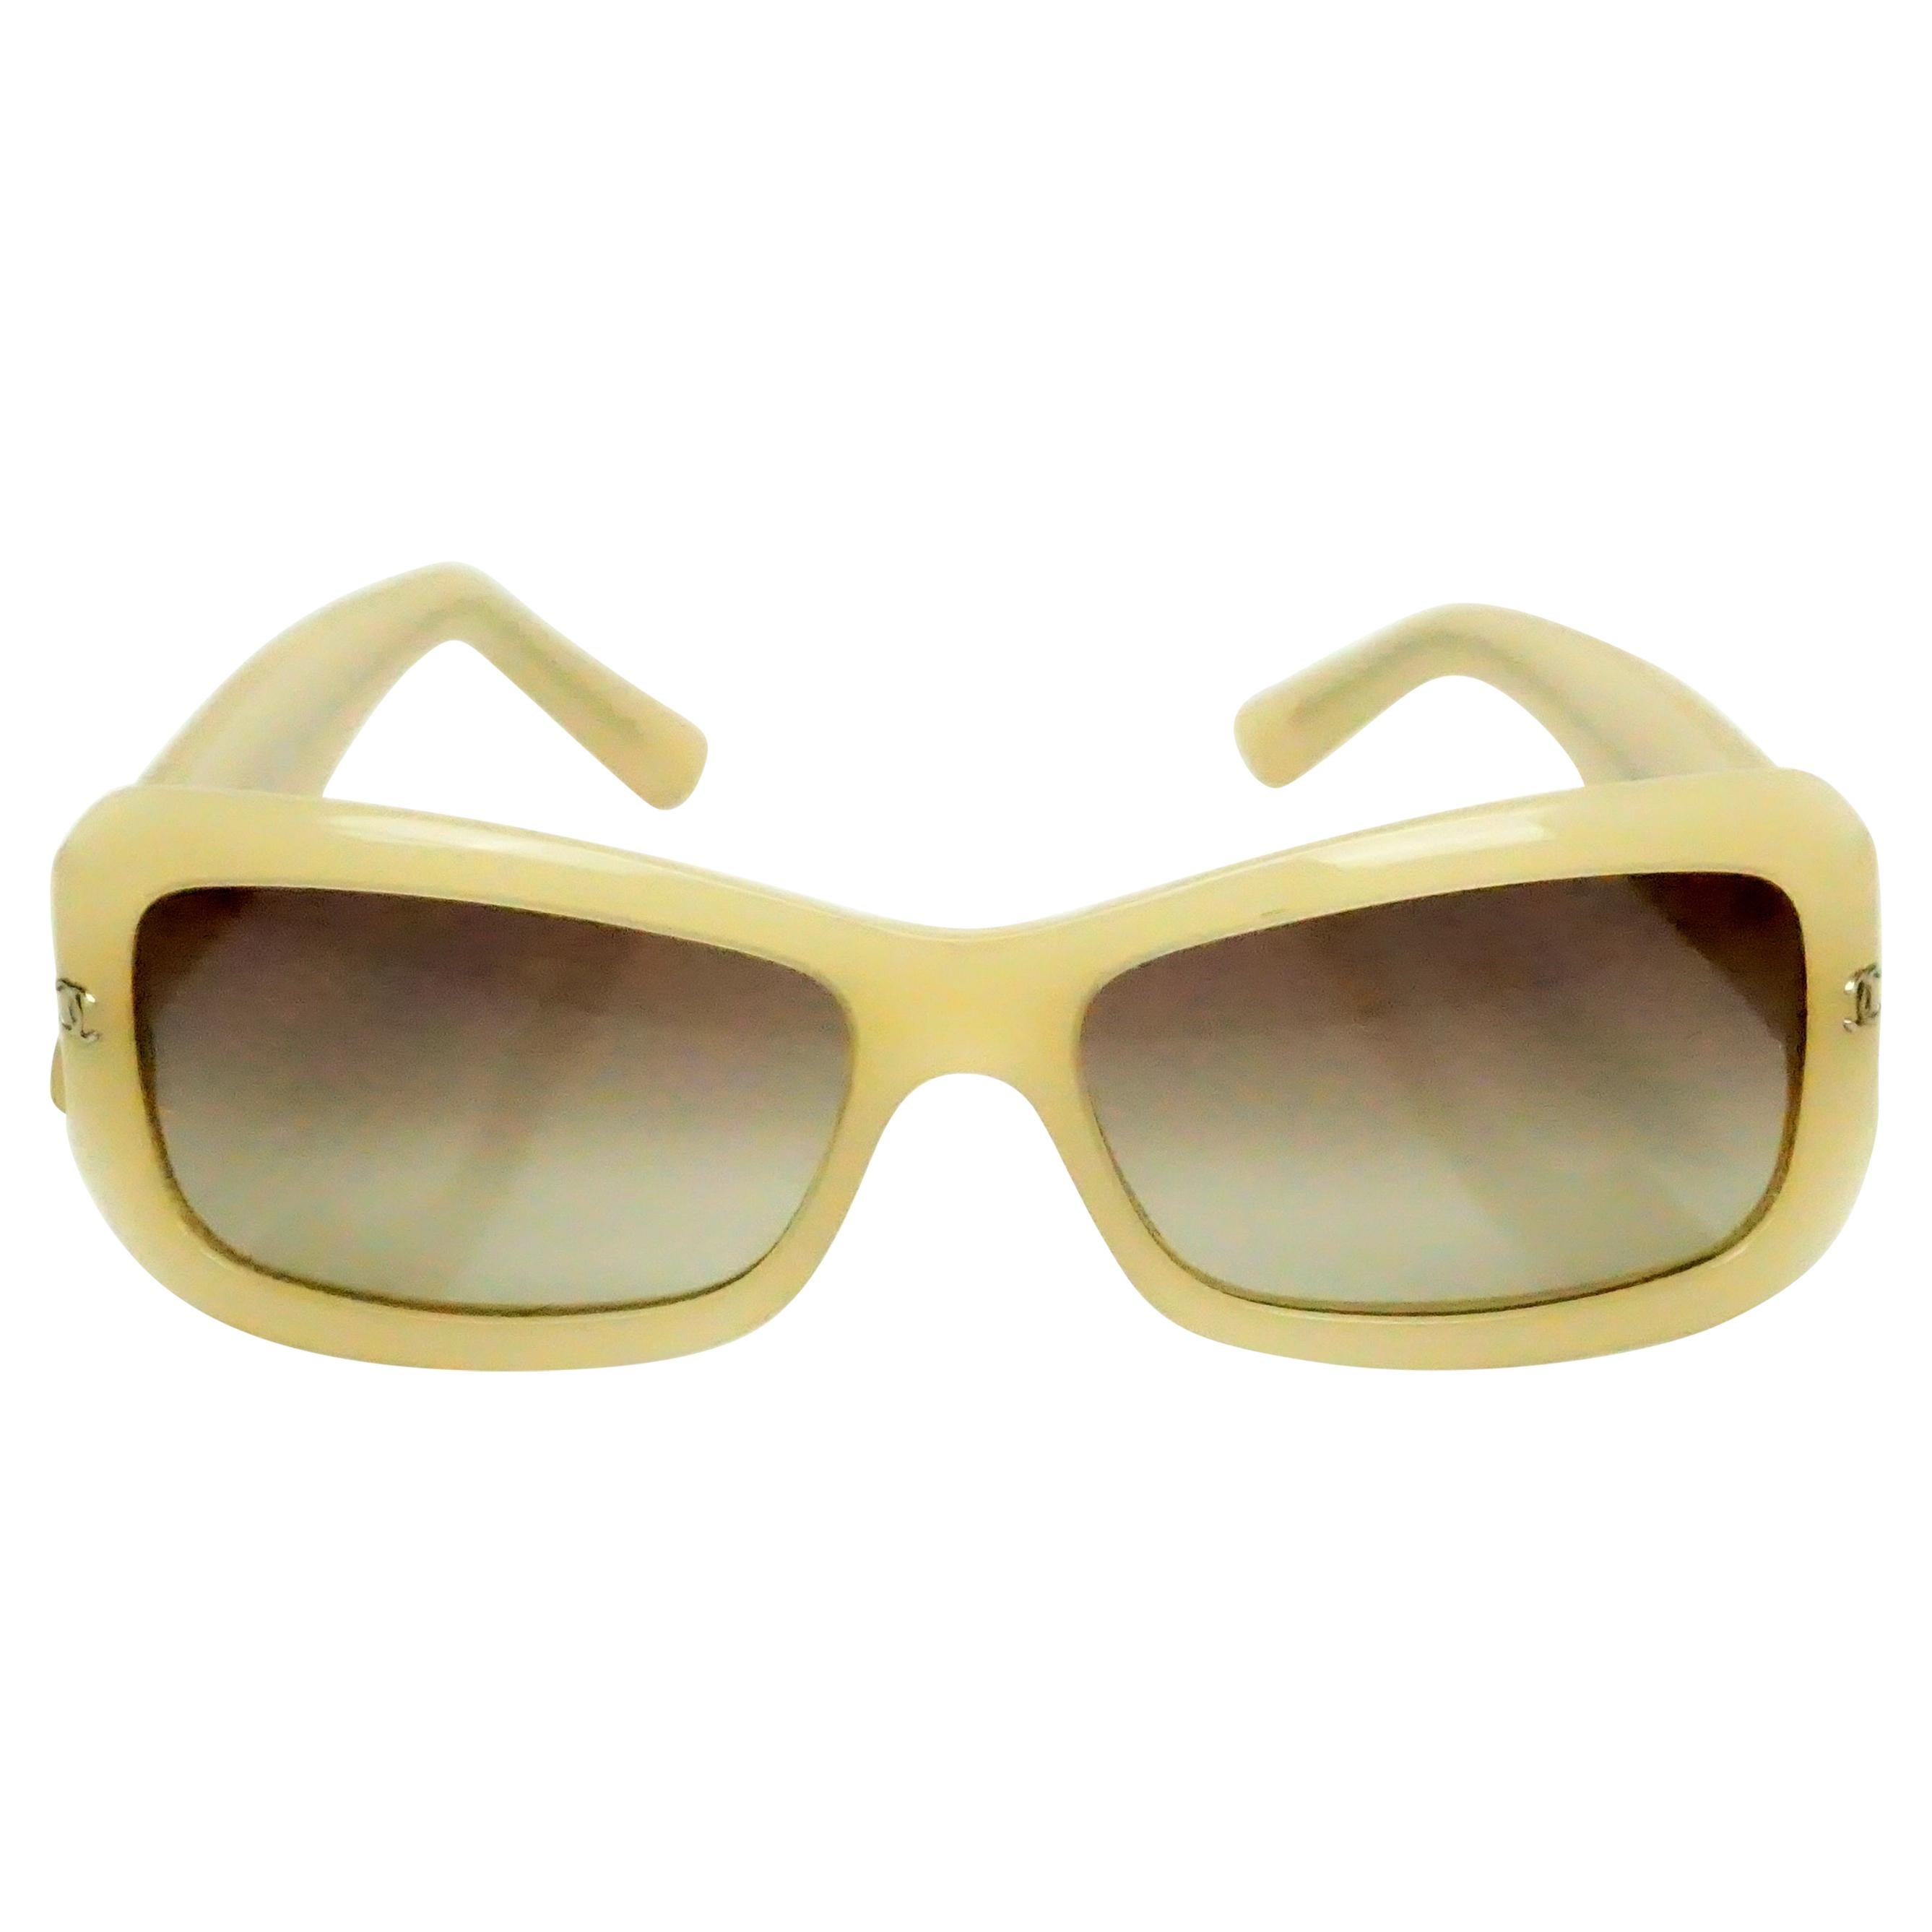 Chanel Beige Sunglasses w/ Studs 